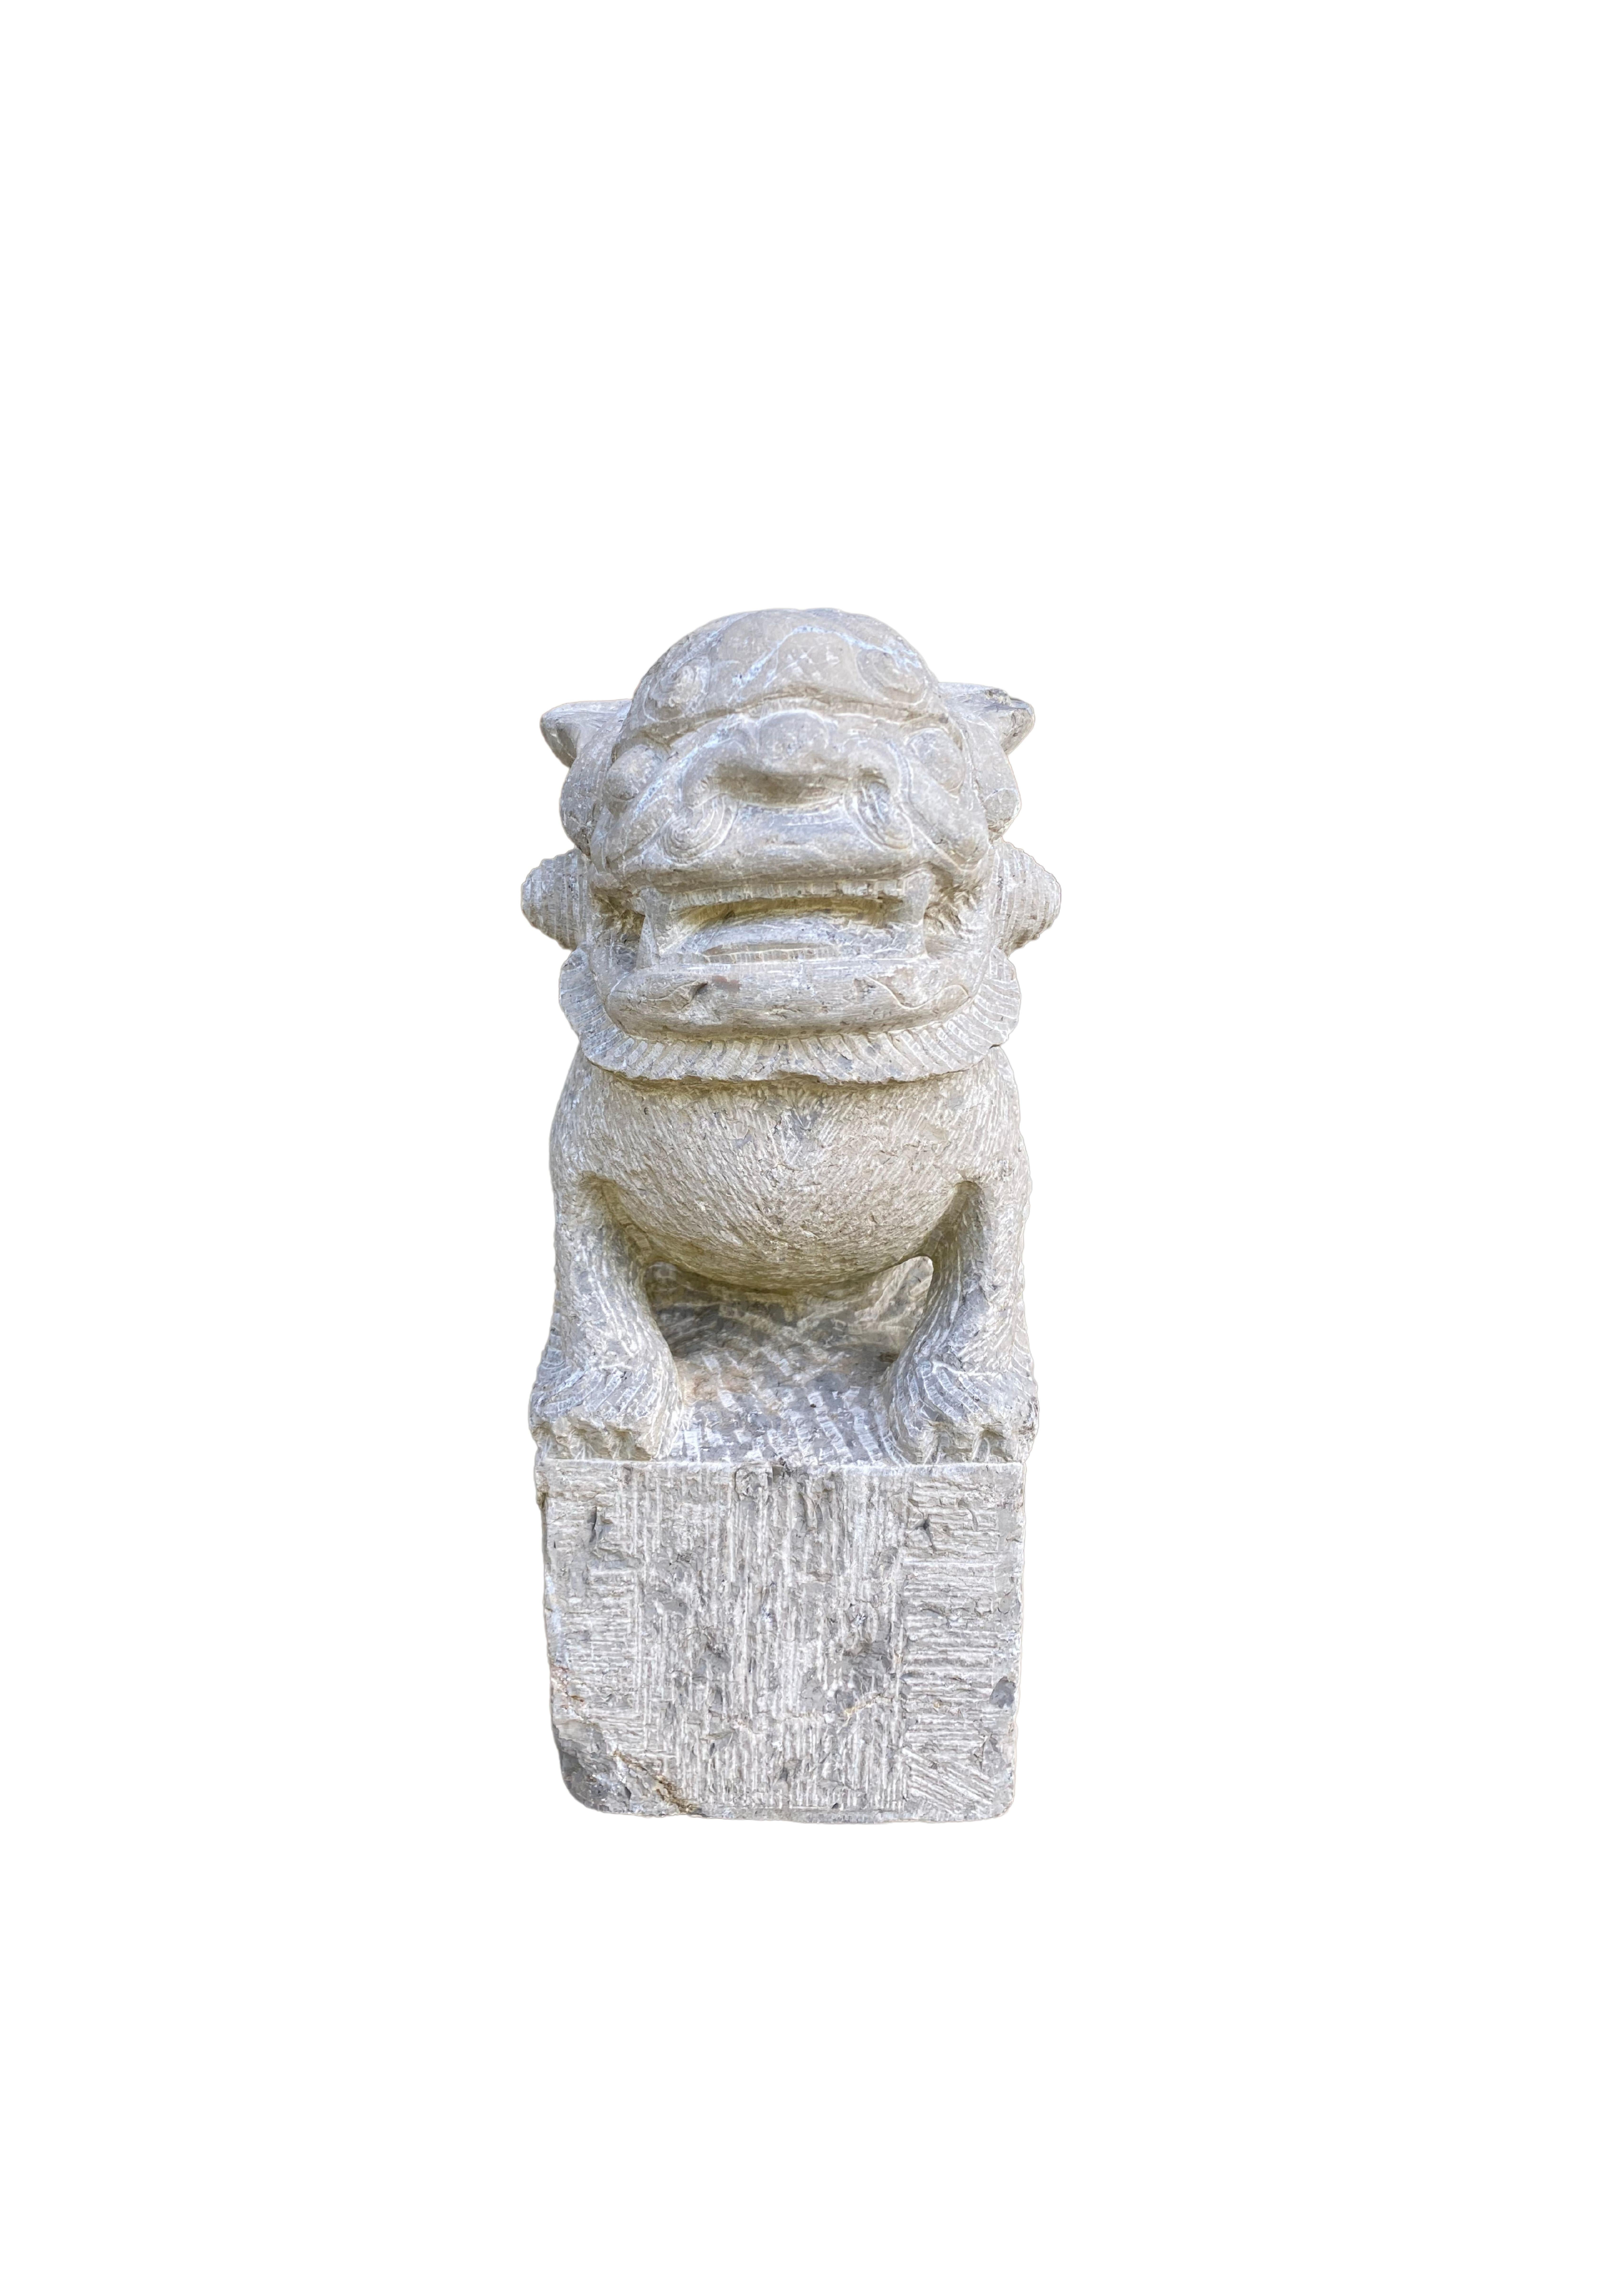 Limestone Fu Dog Guardian Figure from China, c. 1900 For Sale